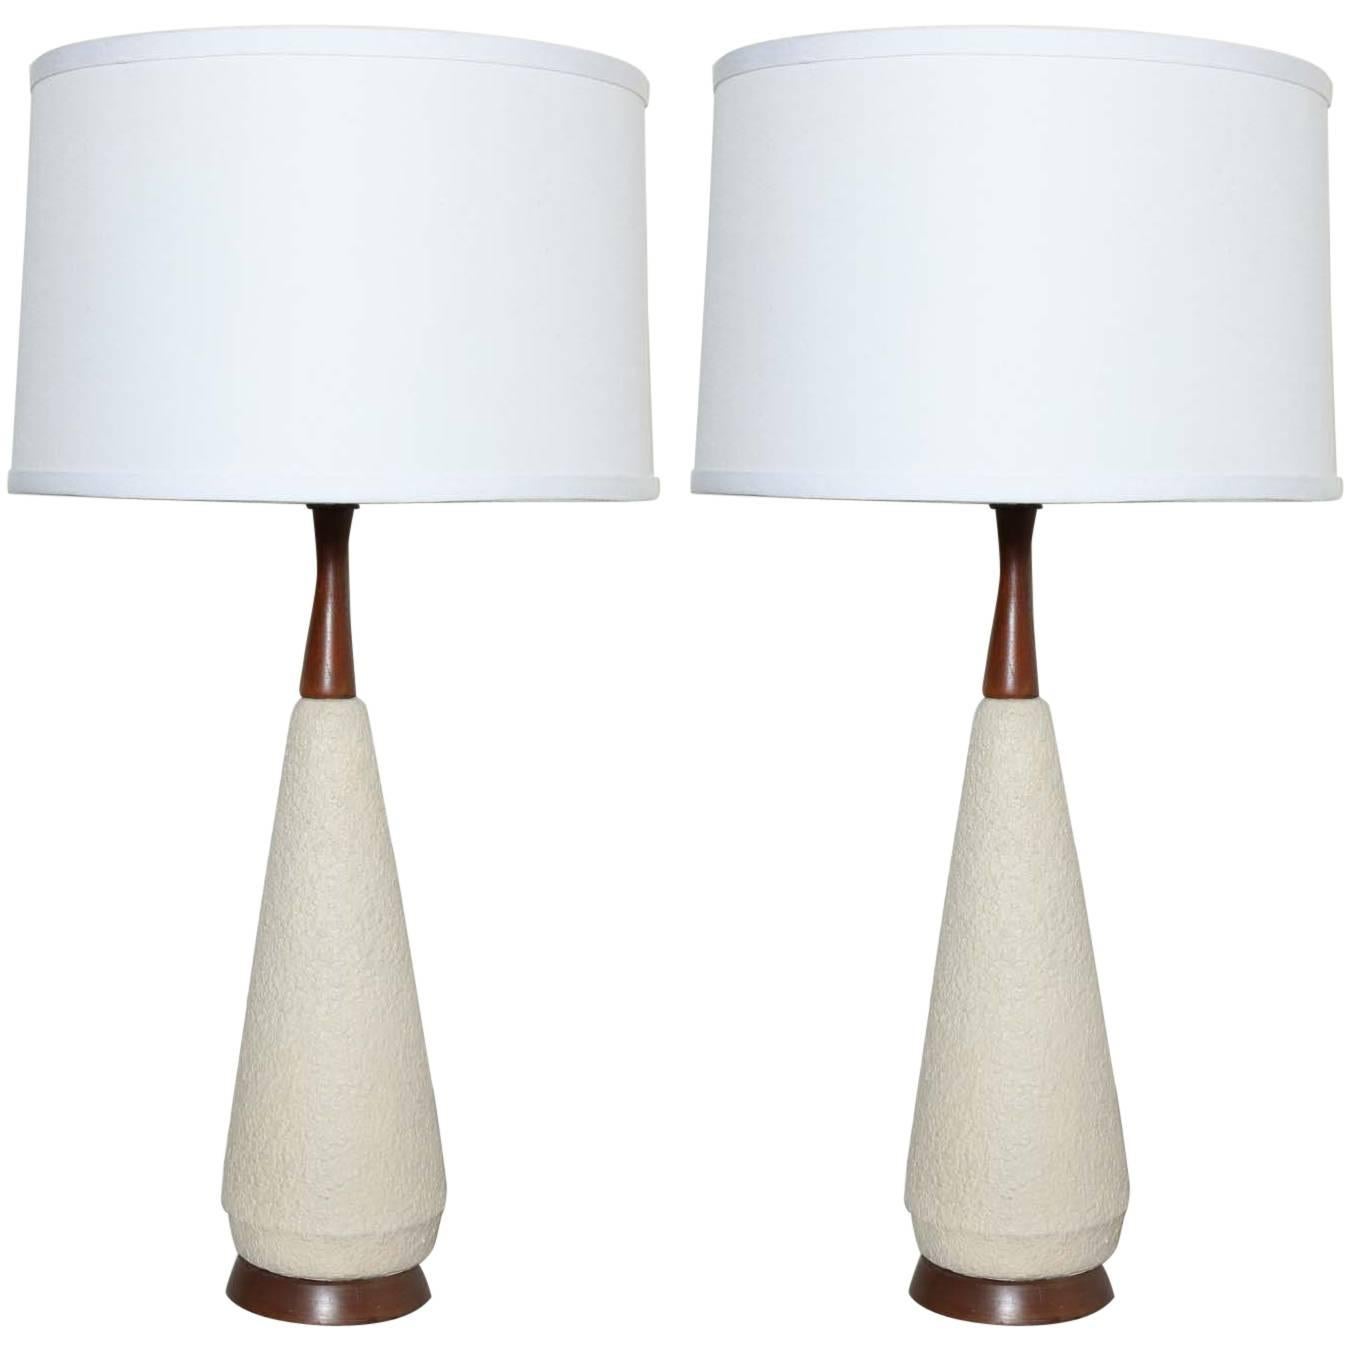 Pair of Dappled Ceramic Table Lamps